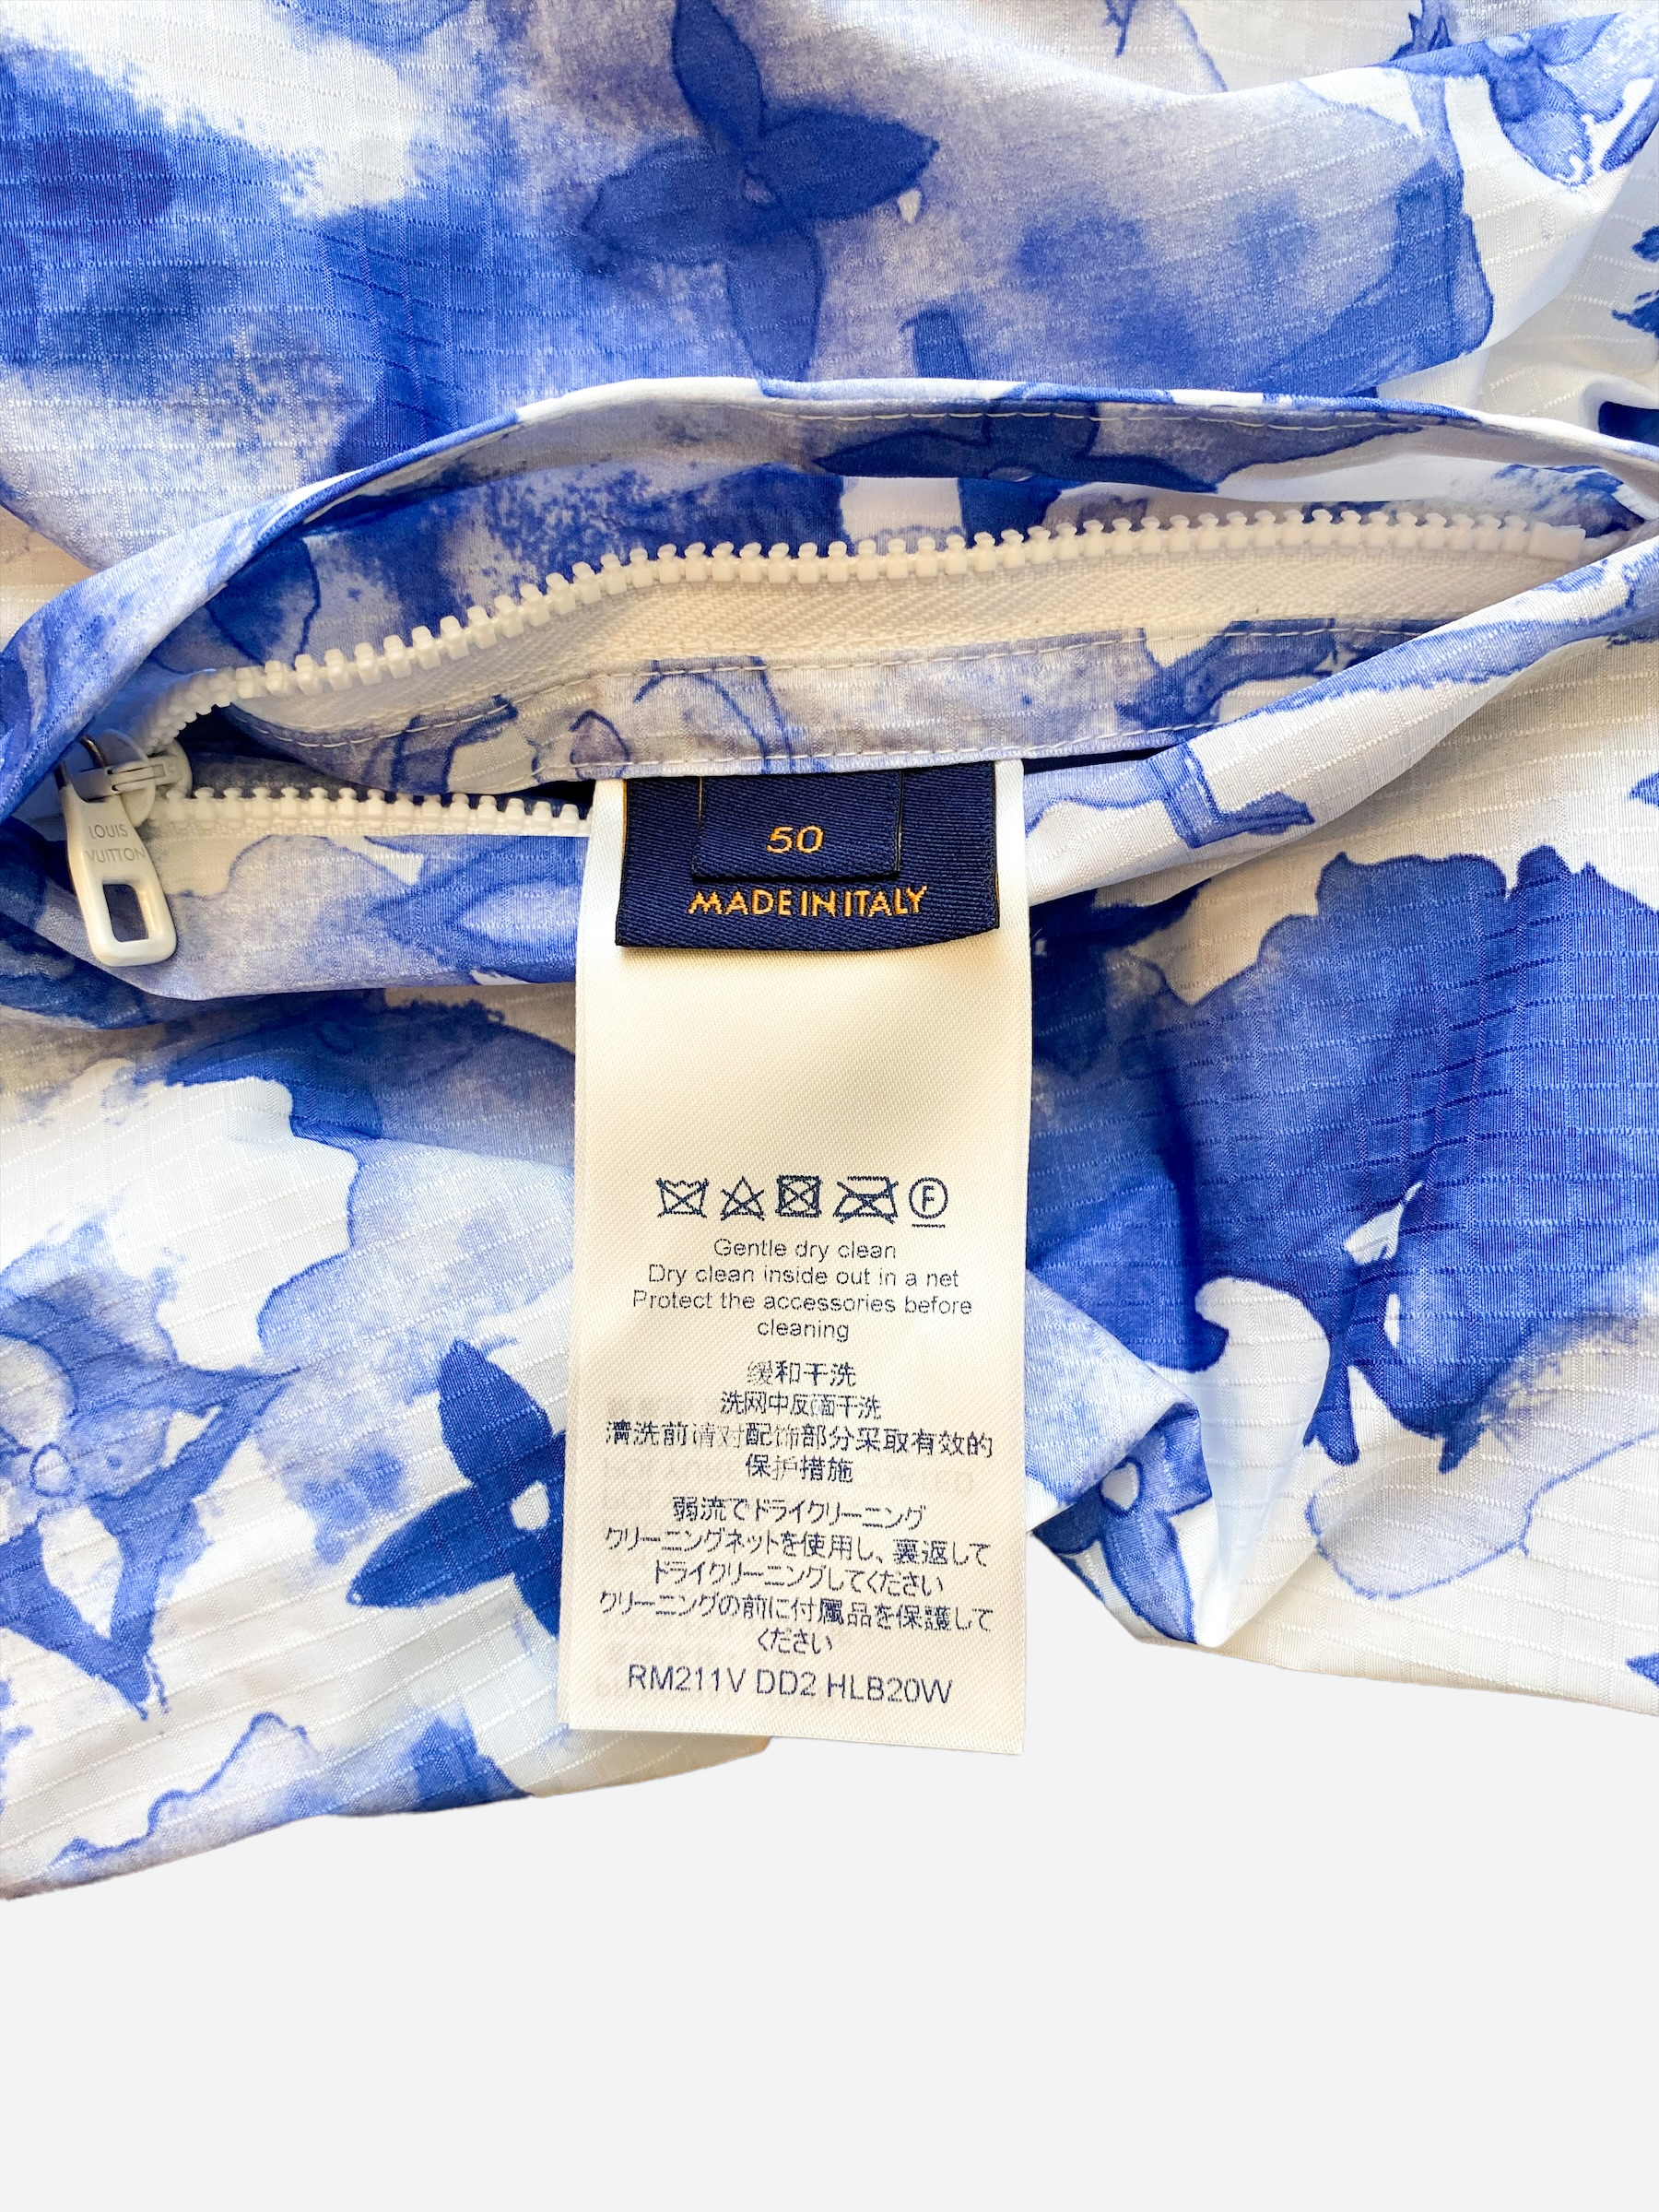 Louis Vuitton® Blue Watercolor Windbreaker  Модные стили, Кэжуал наряды,  Ветровка